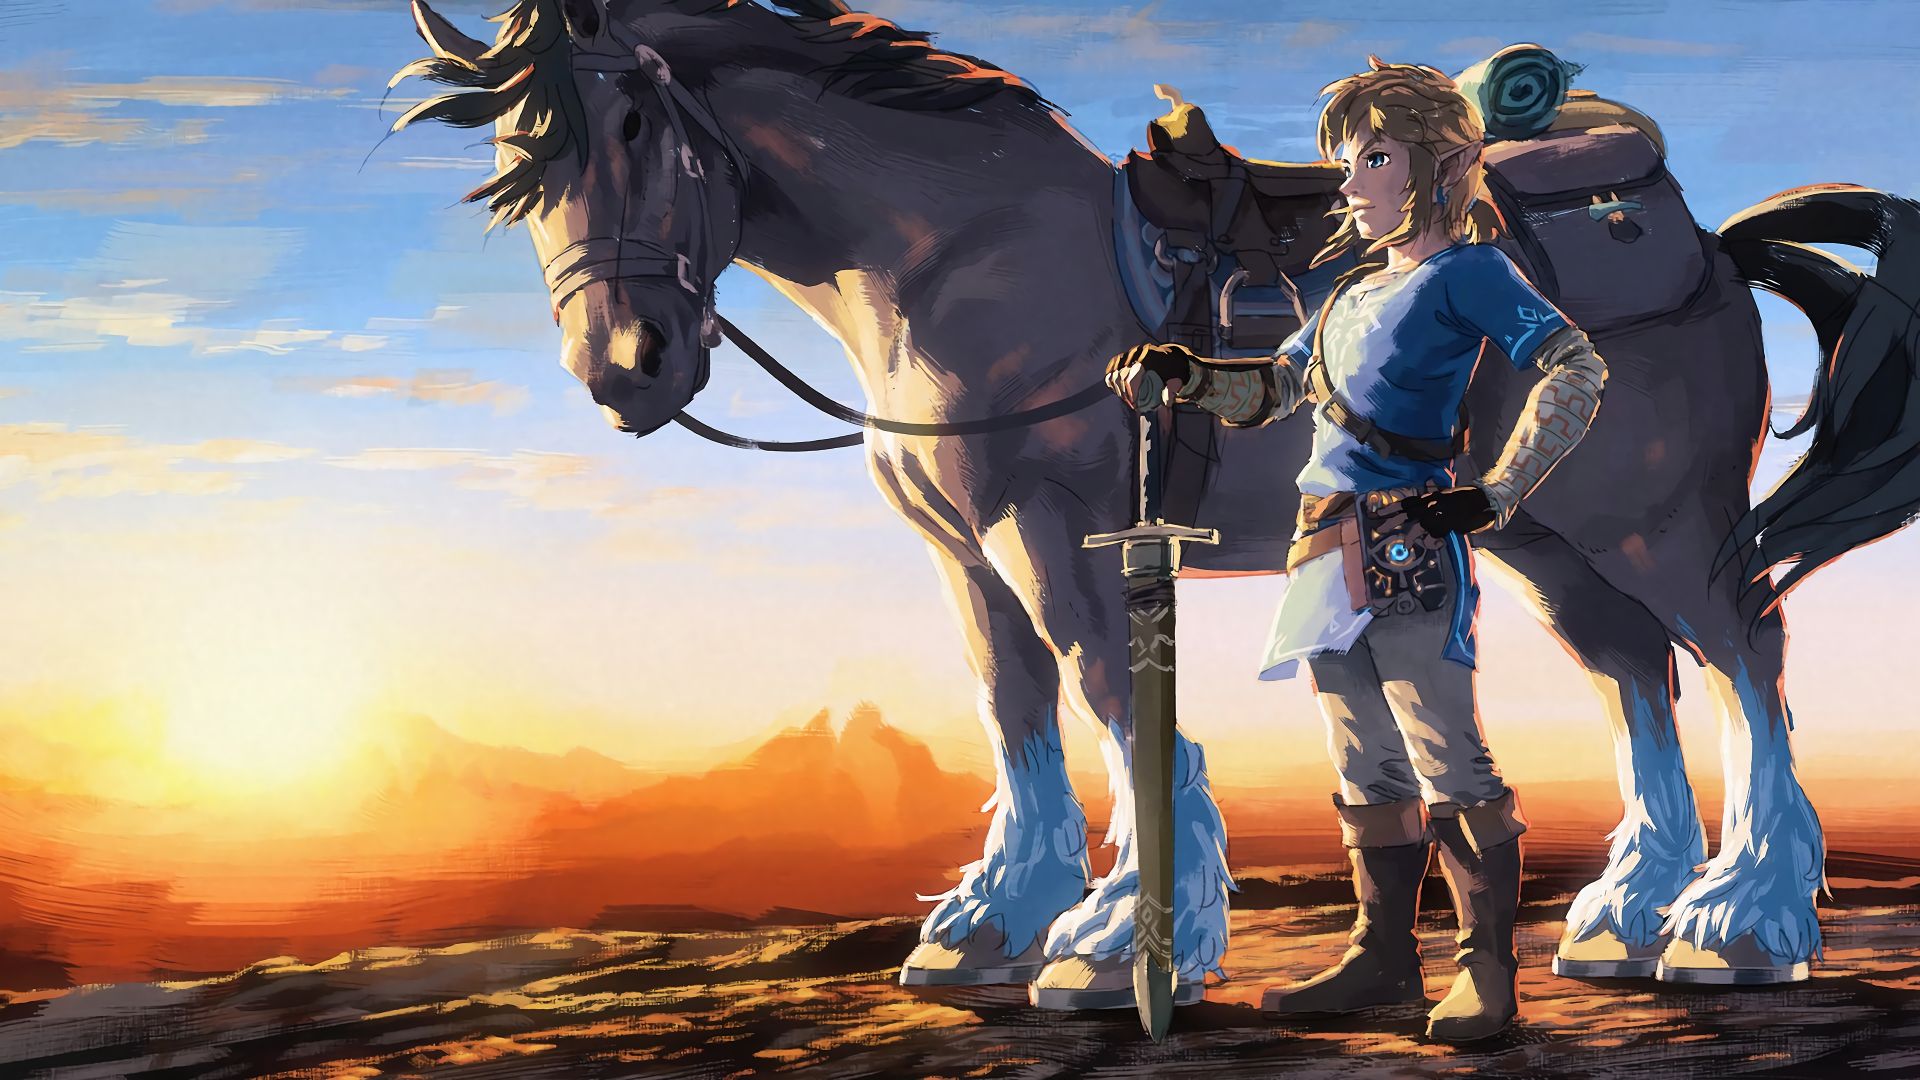 Wallpaper The Legend of Zelda: Breath of the Wild video game, horse